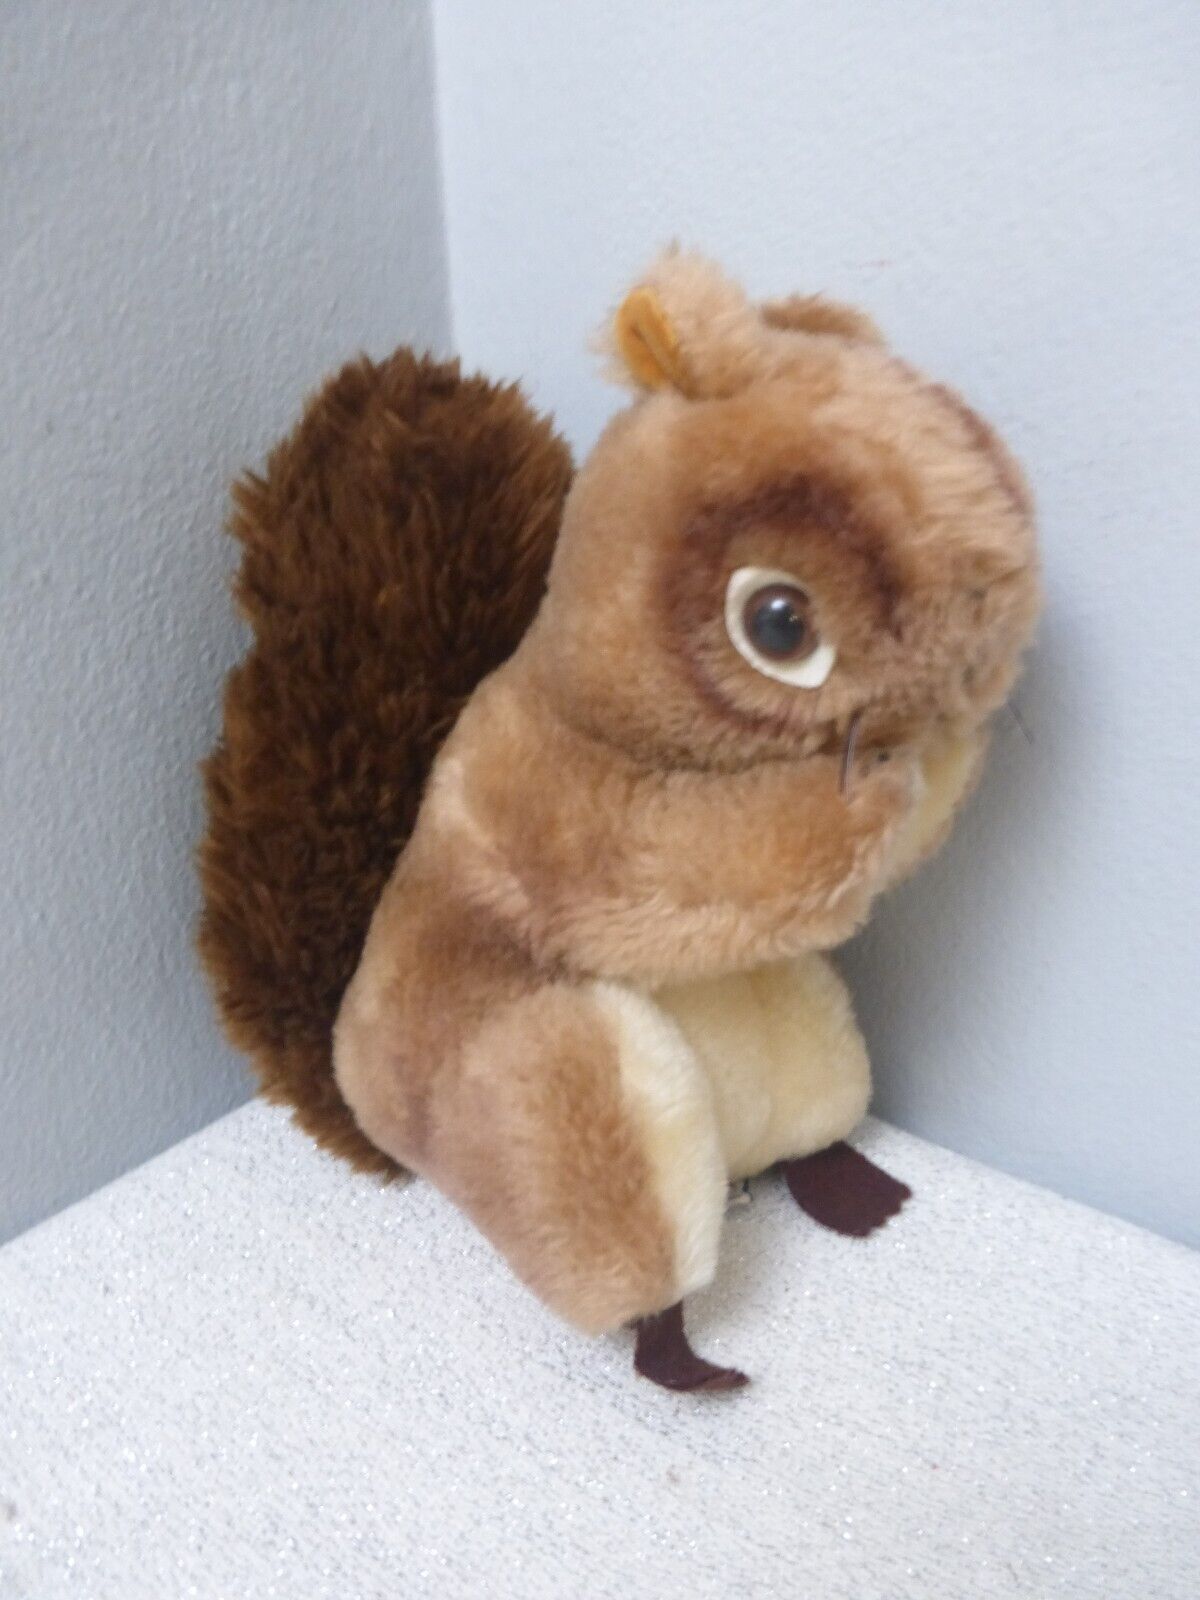 Darling Vintage Dakin 1974 Squirrel Stuffed Animal Plush Toy 8"